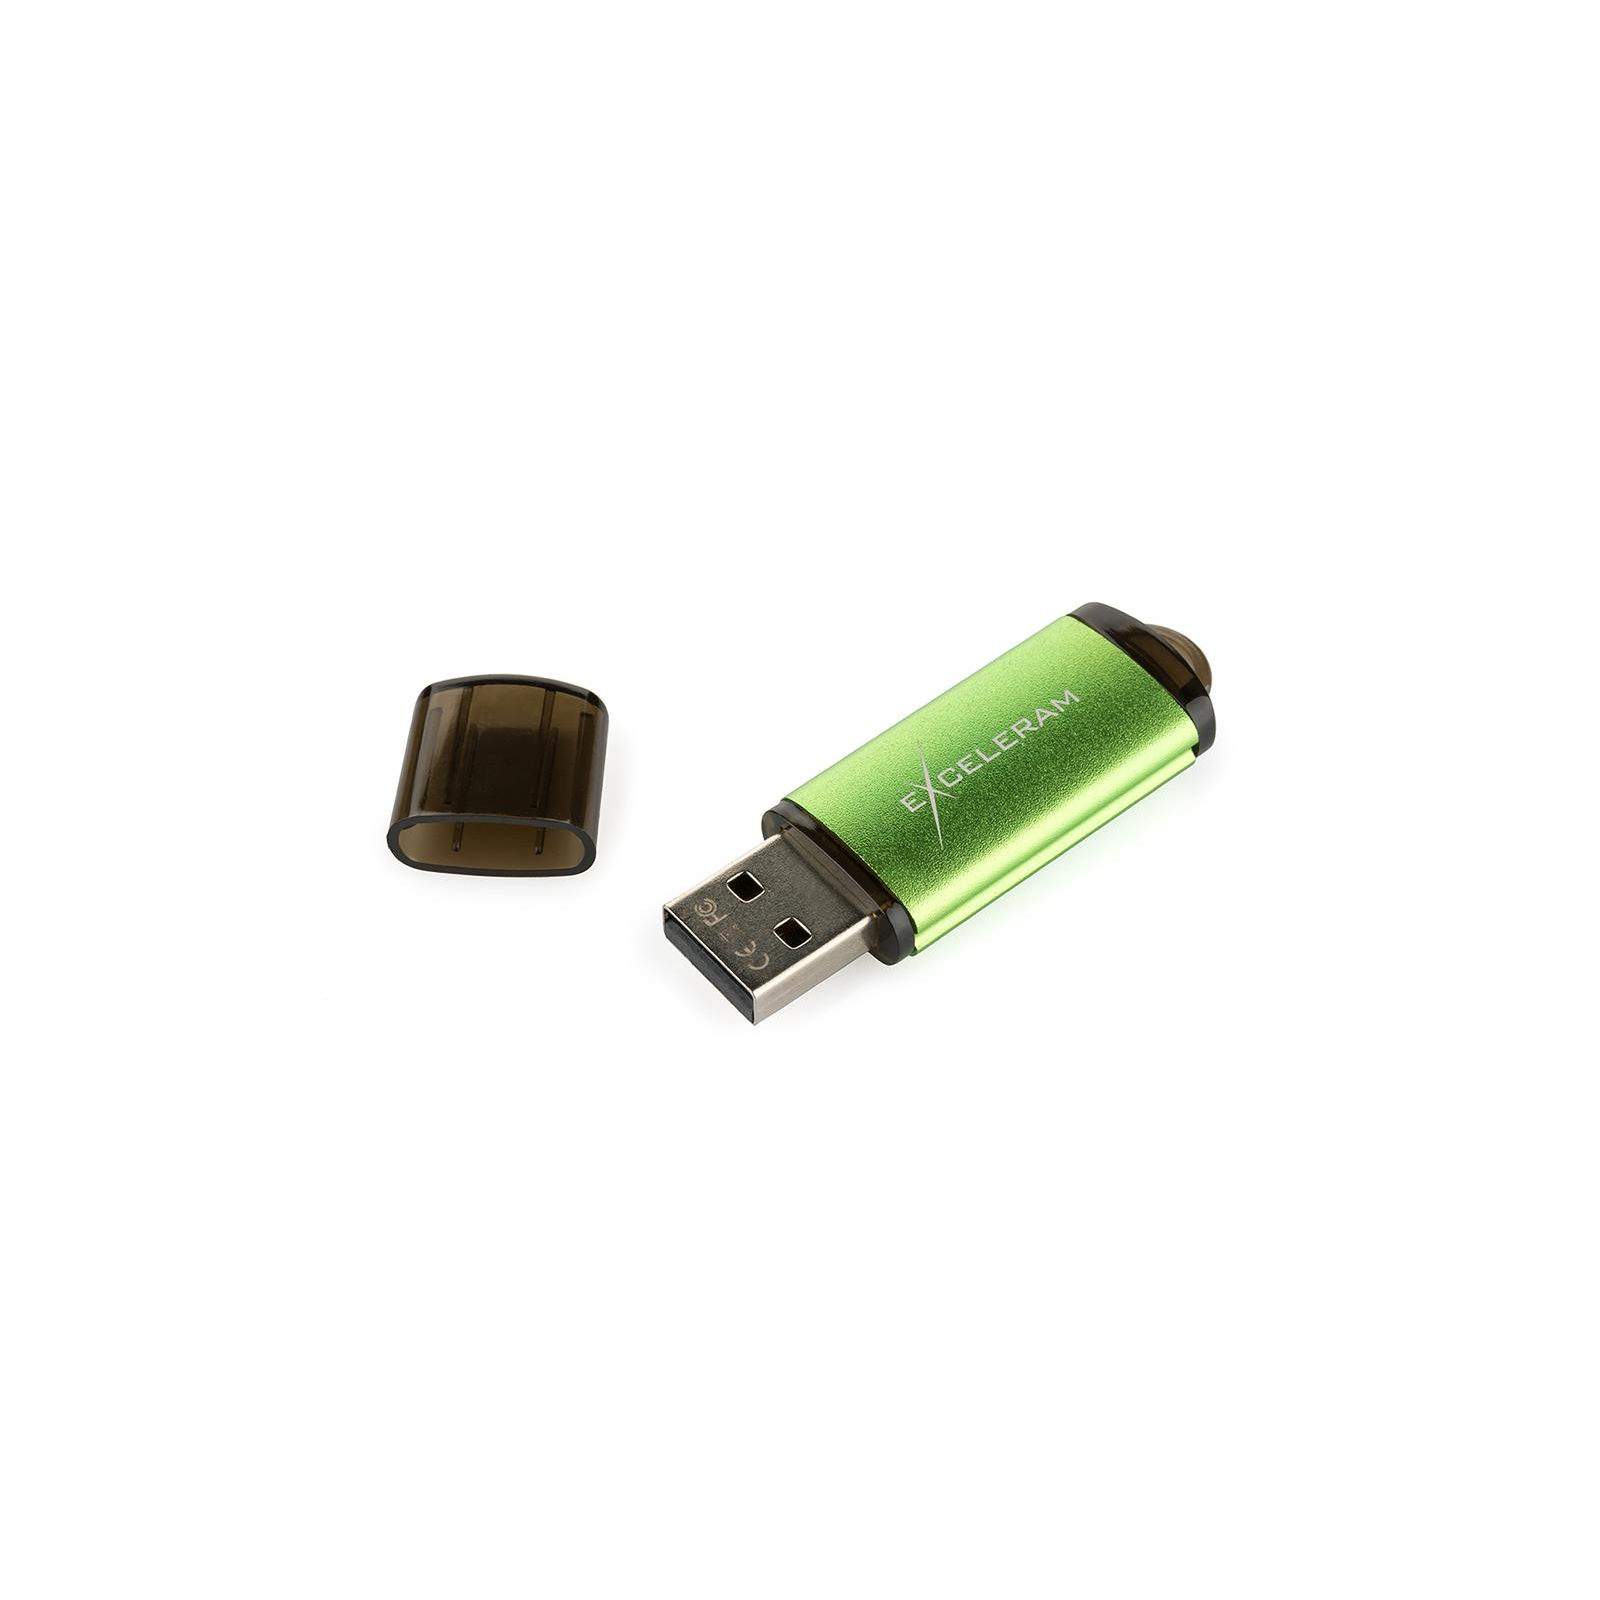 USB флеш накопитель eXceleram 32GB A3 Series Green USB 2.0 (EXA3U2GR32) изображение 6